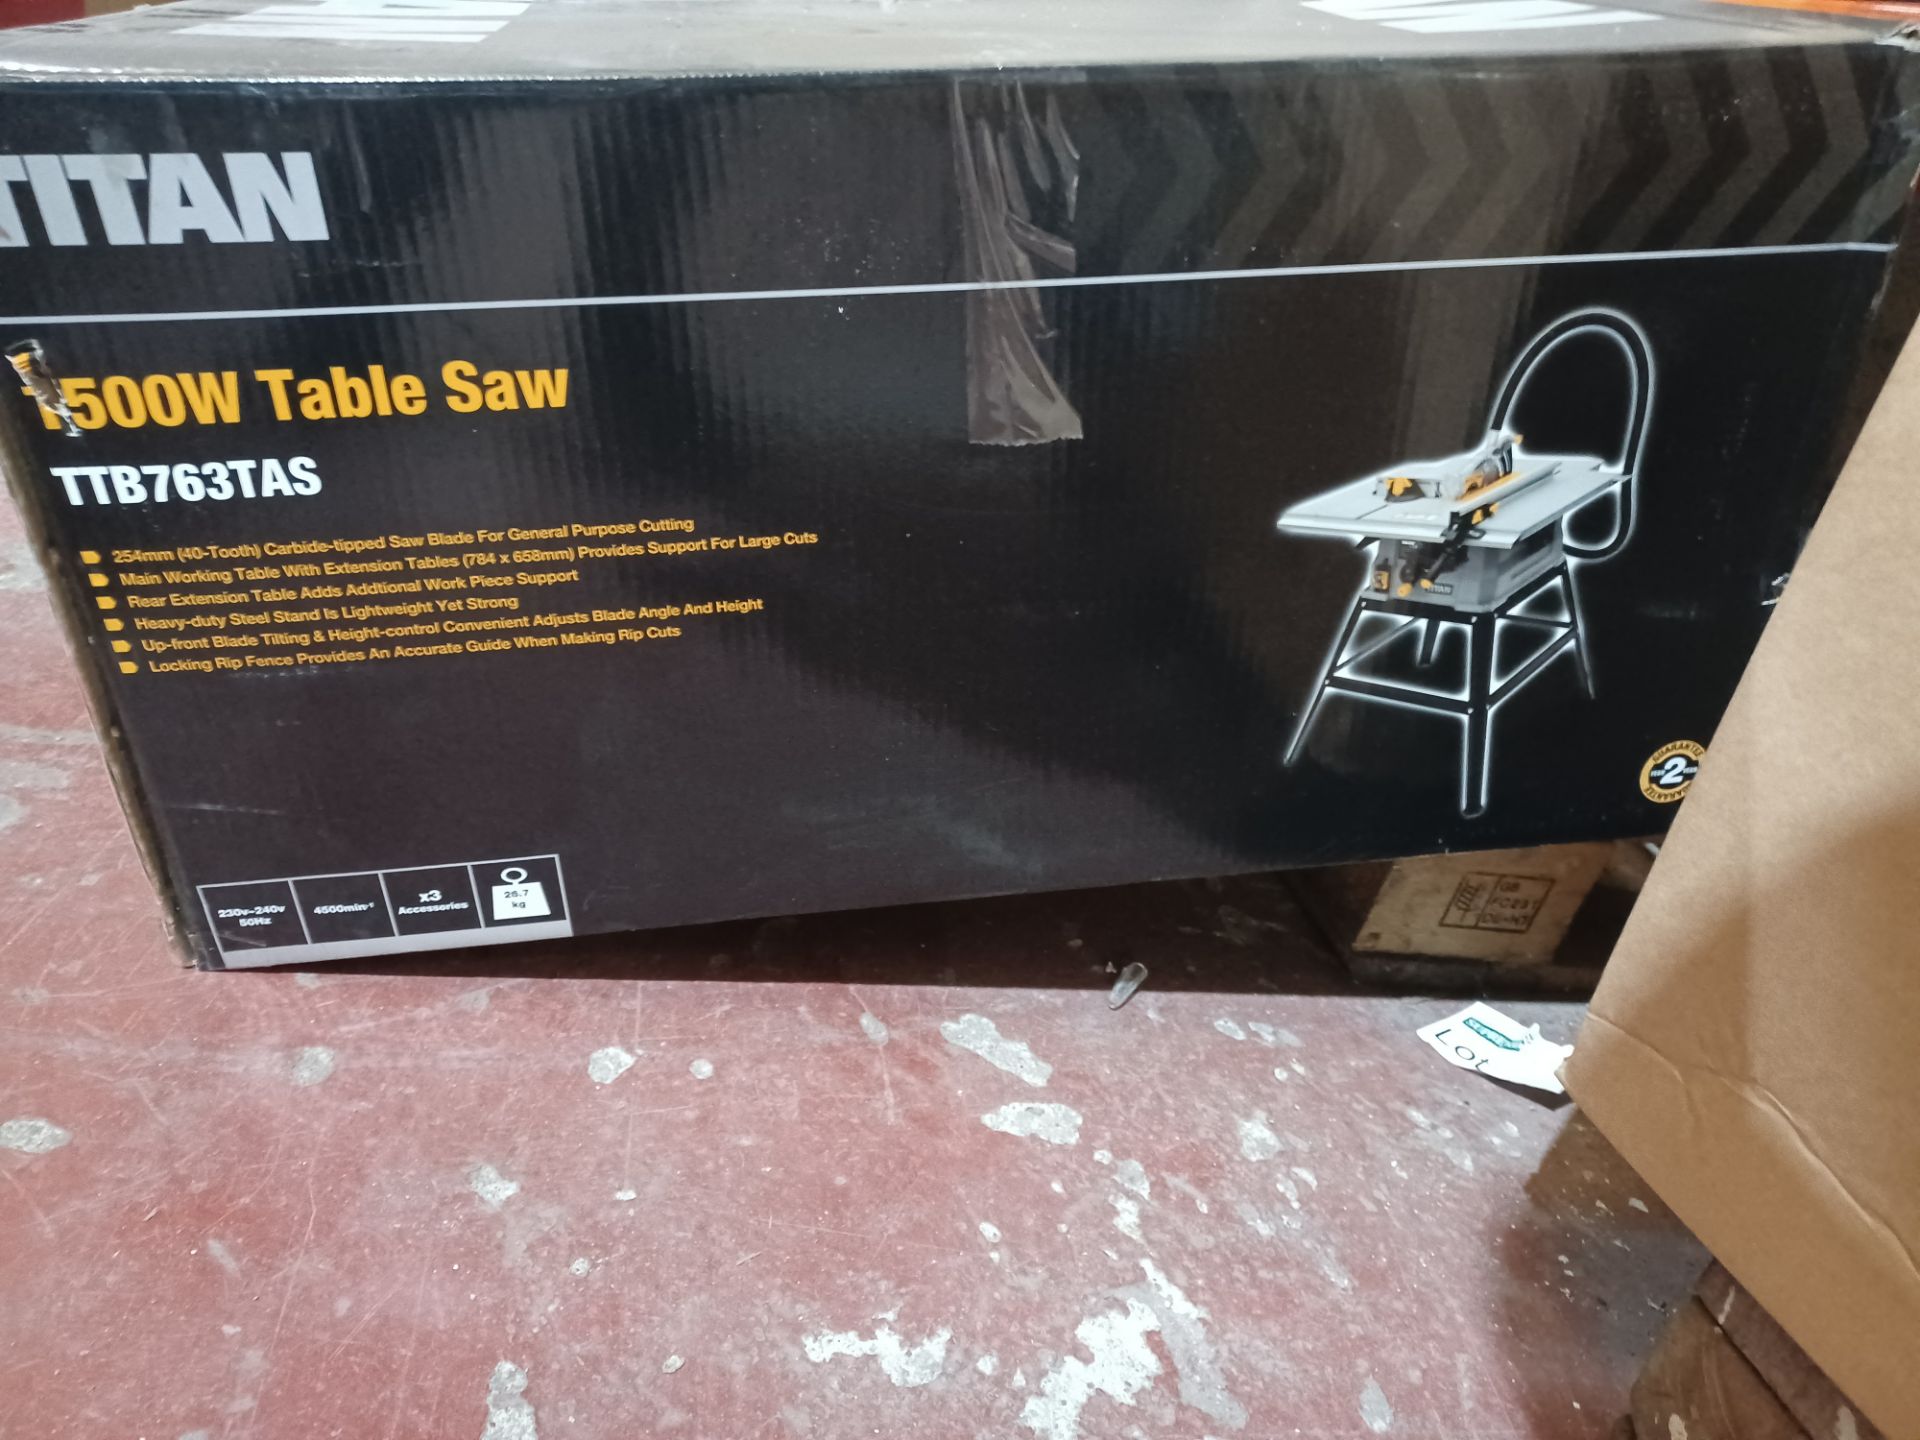 TITAN 1500W TABLE SAW BOXED - PCK